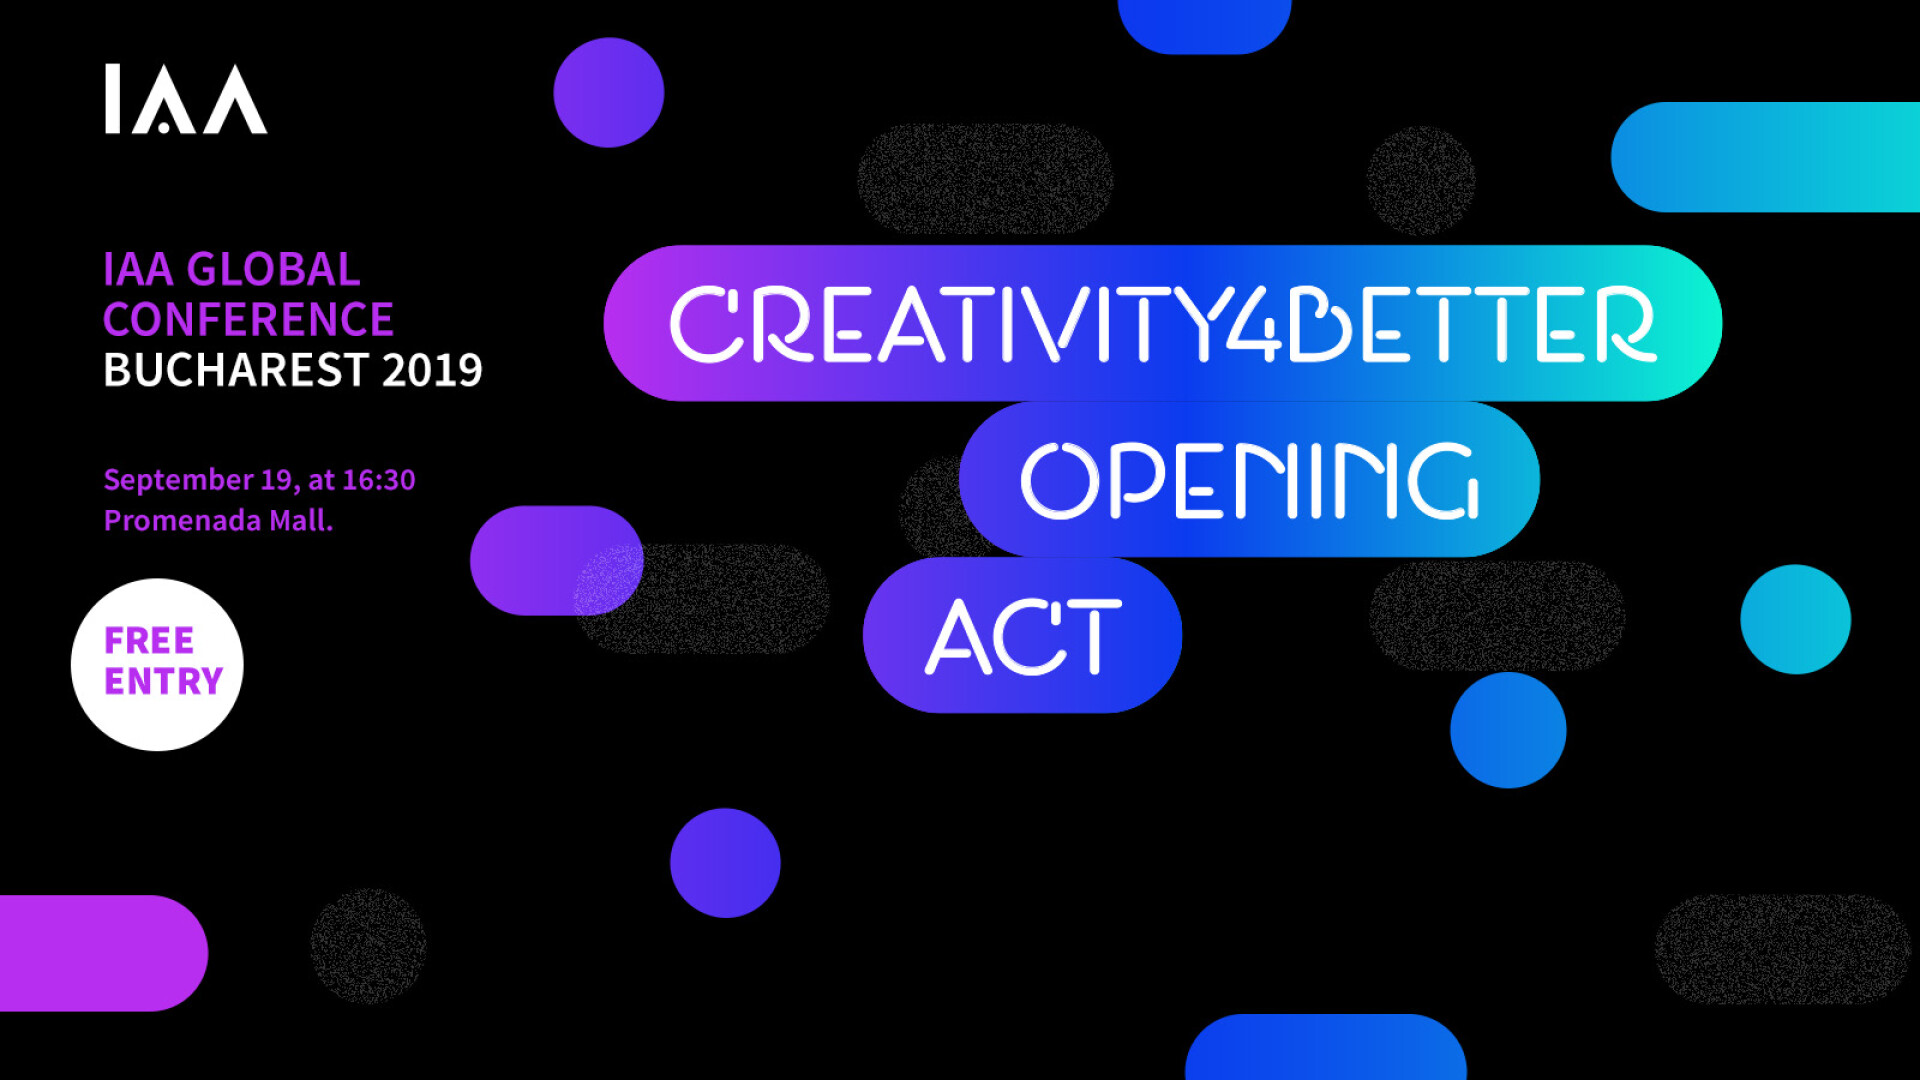 ”Creativity4Better” Opening Act